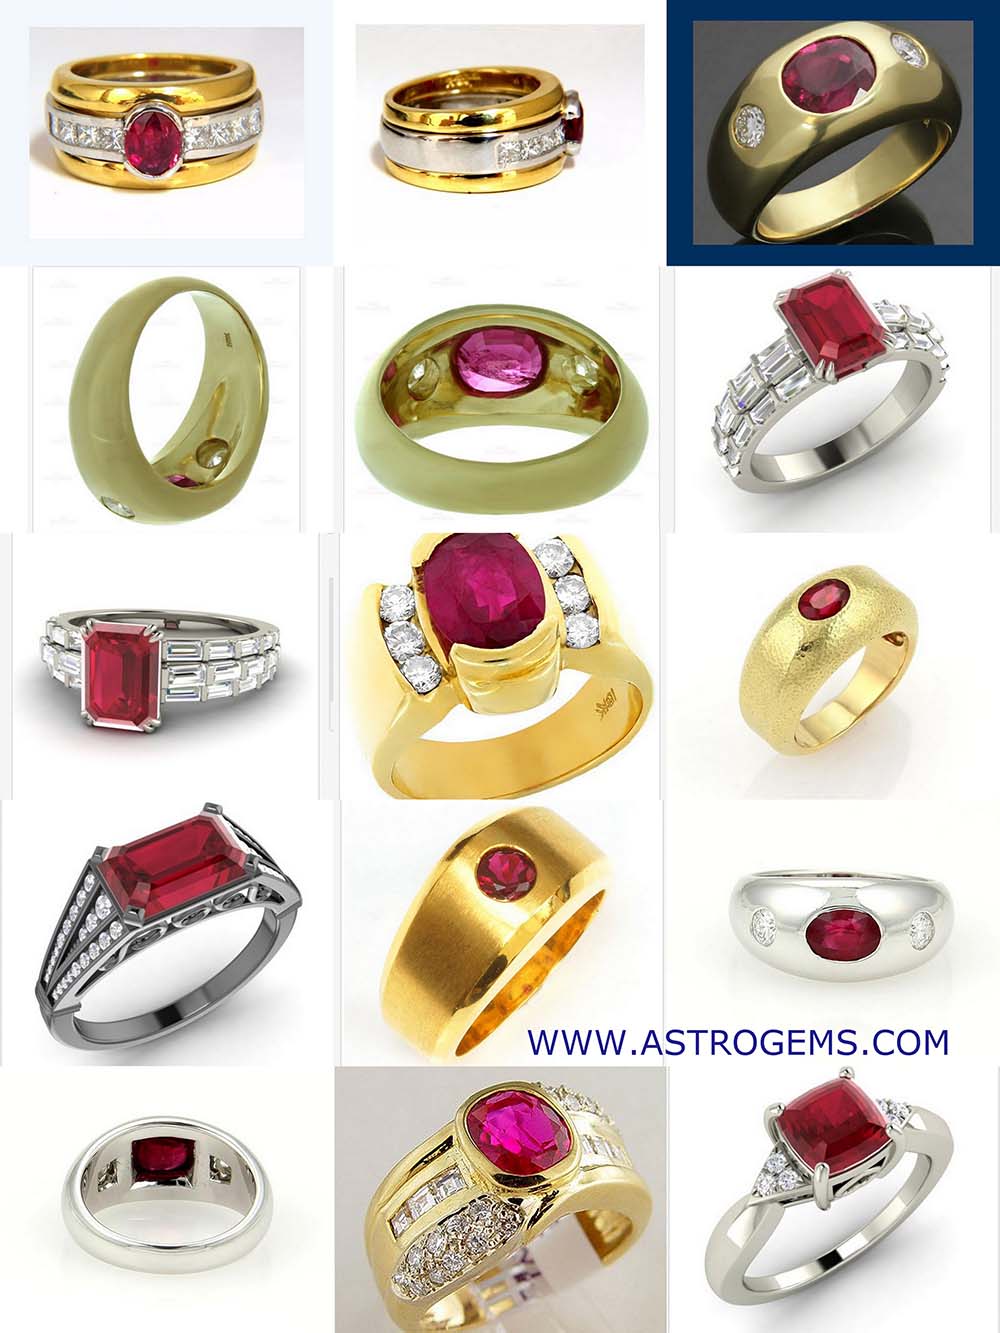 Astrogems can make custom astrological Ruby rings.